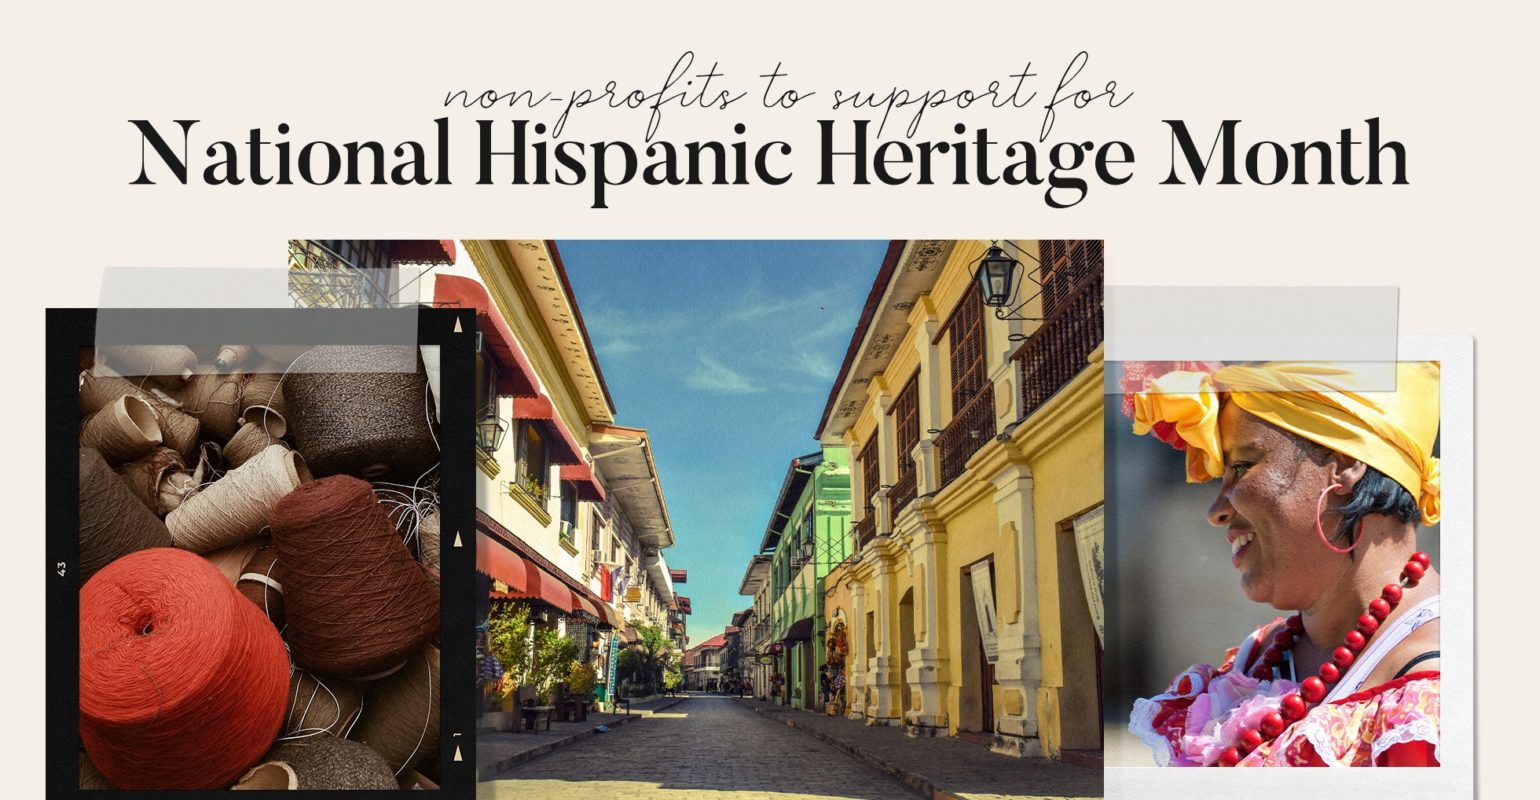 Hispanic Heritage Month Nonprofits to Support